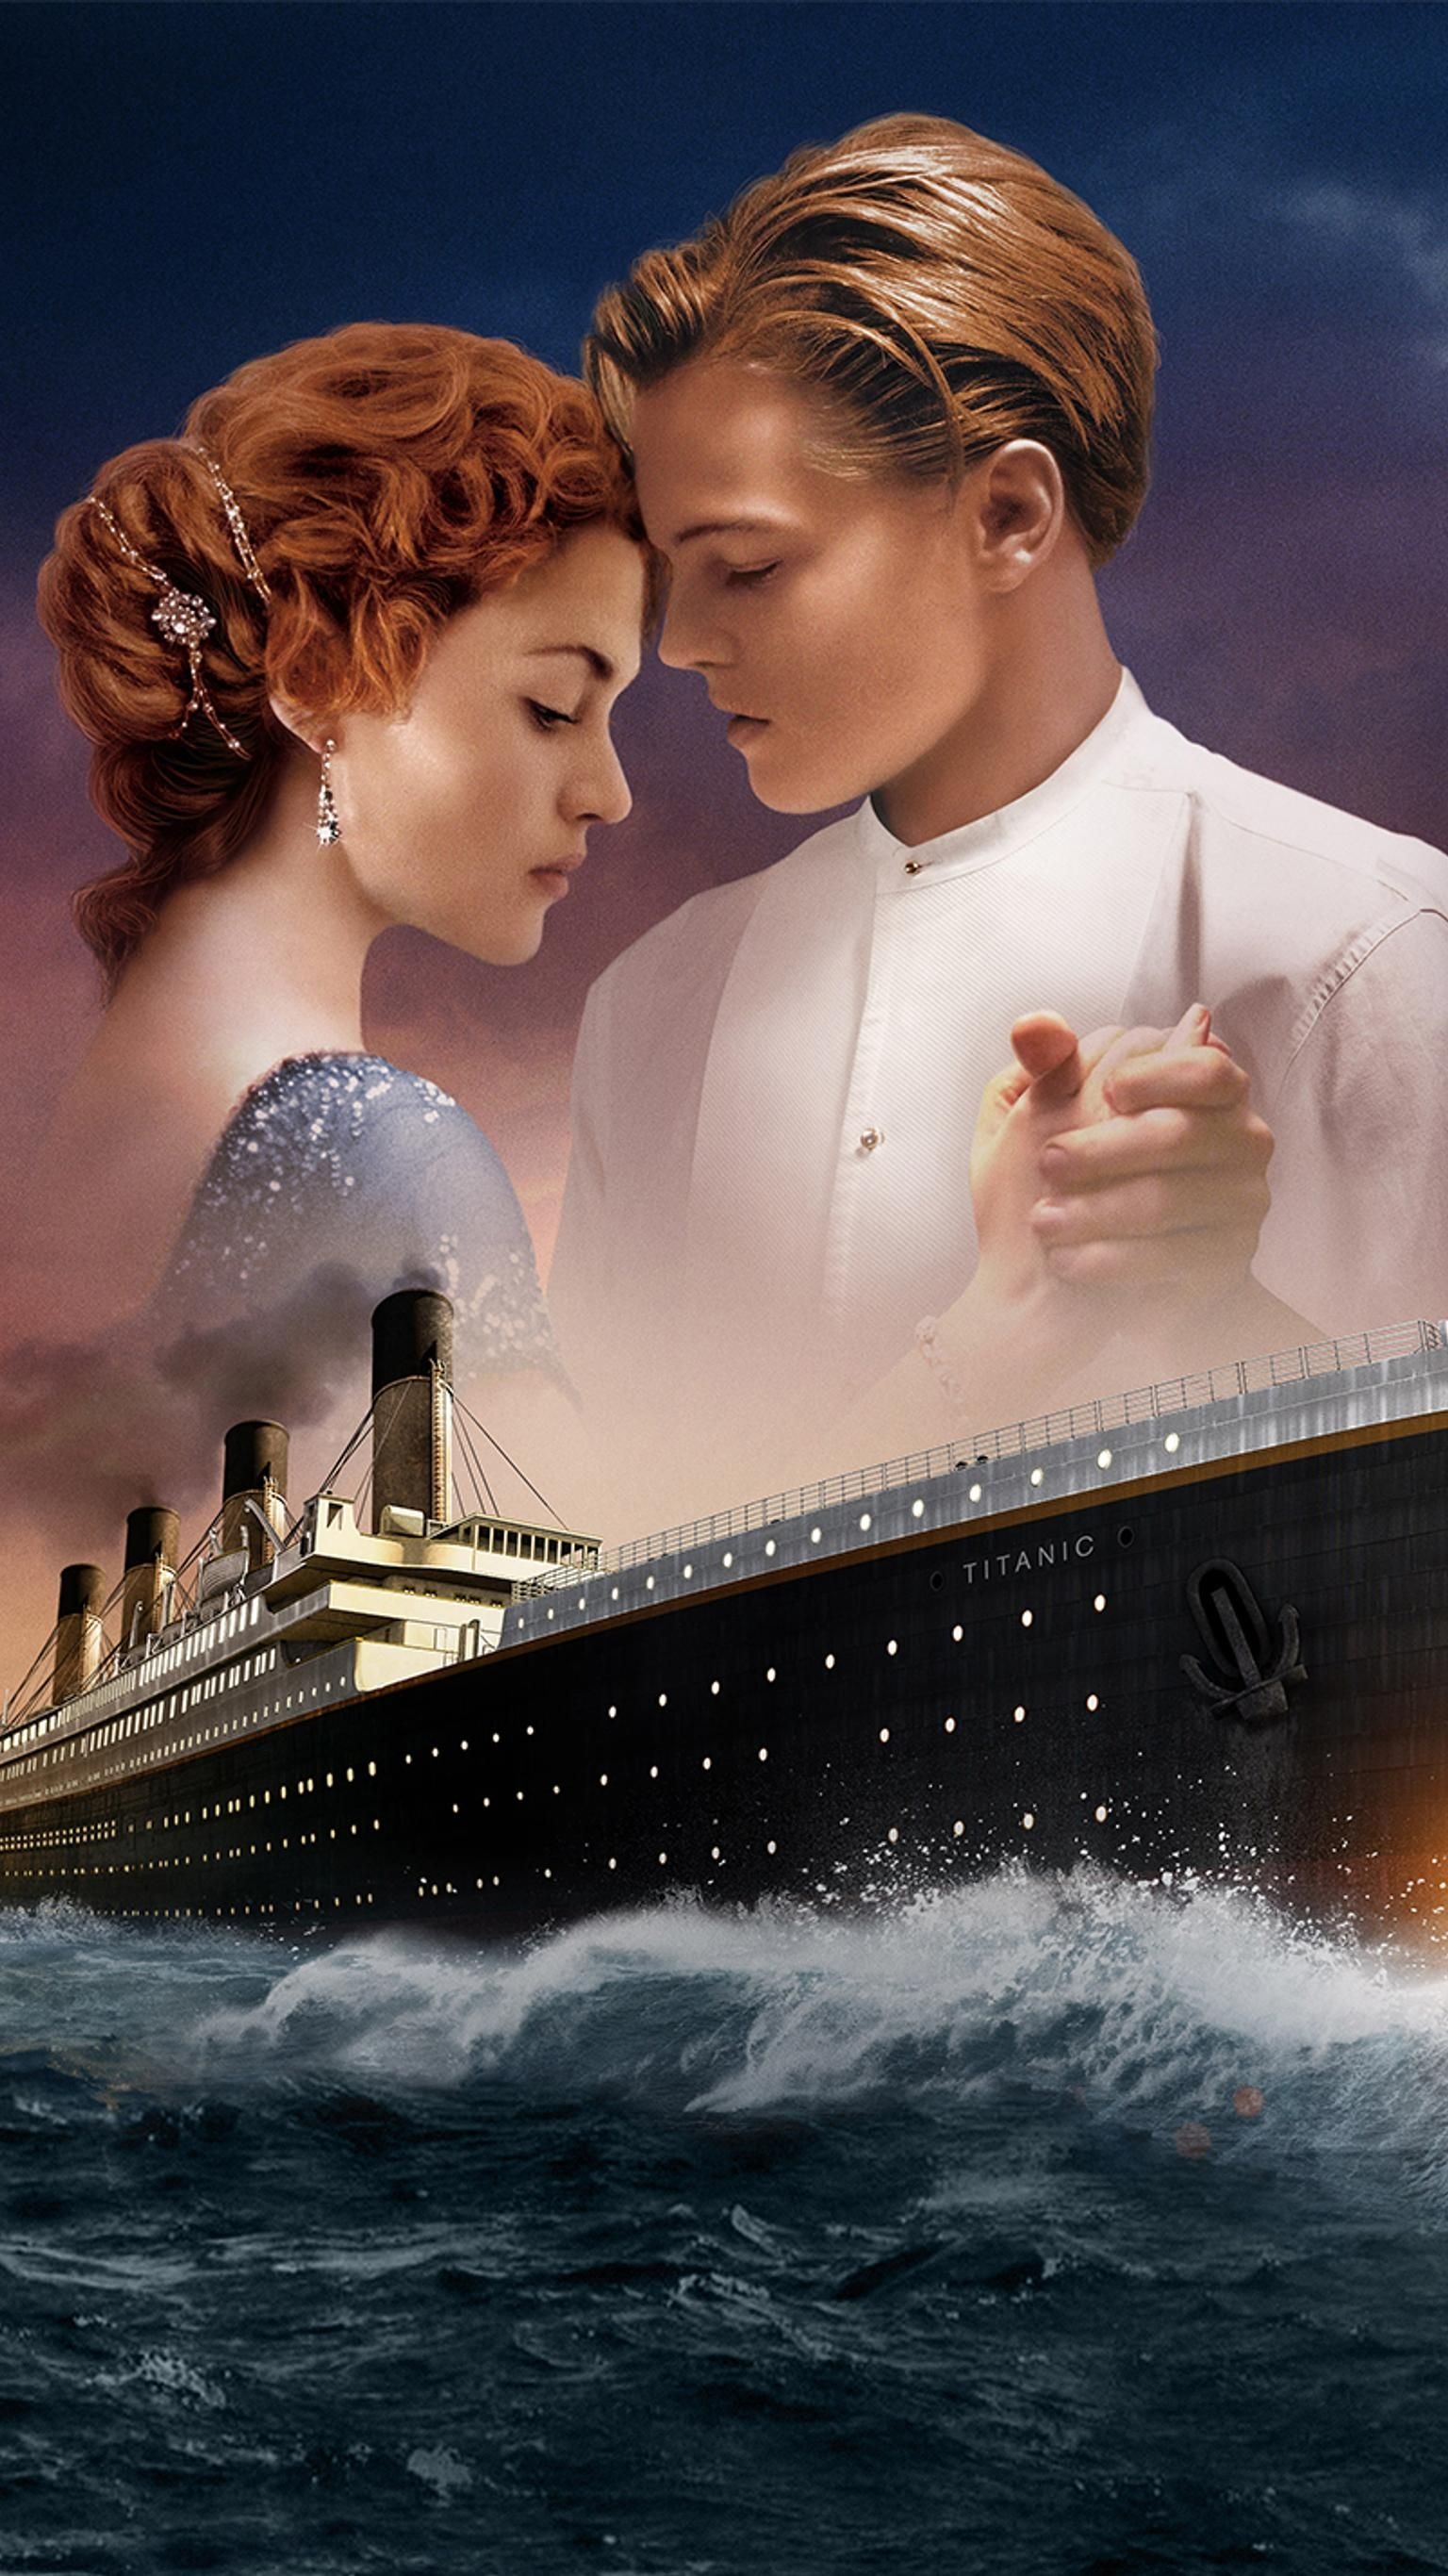 Titanic movie scenes, Movie poster classic, Movie mania wallpaper, Complete film experience, 1540x2740 HD Phone